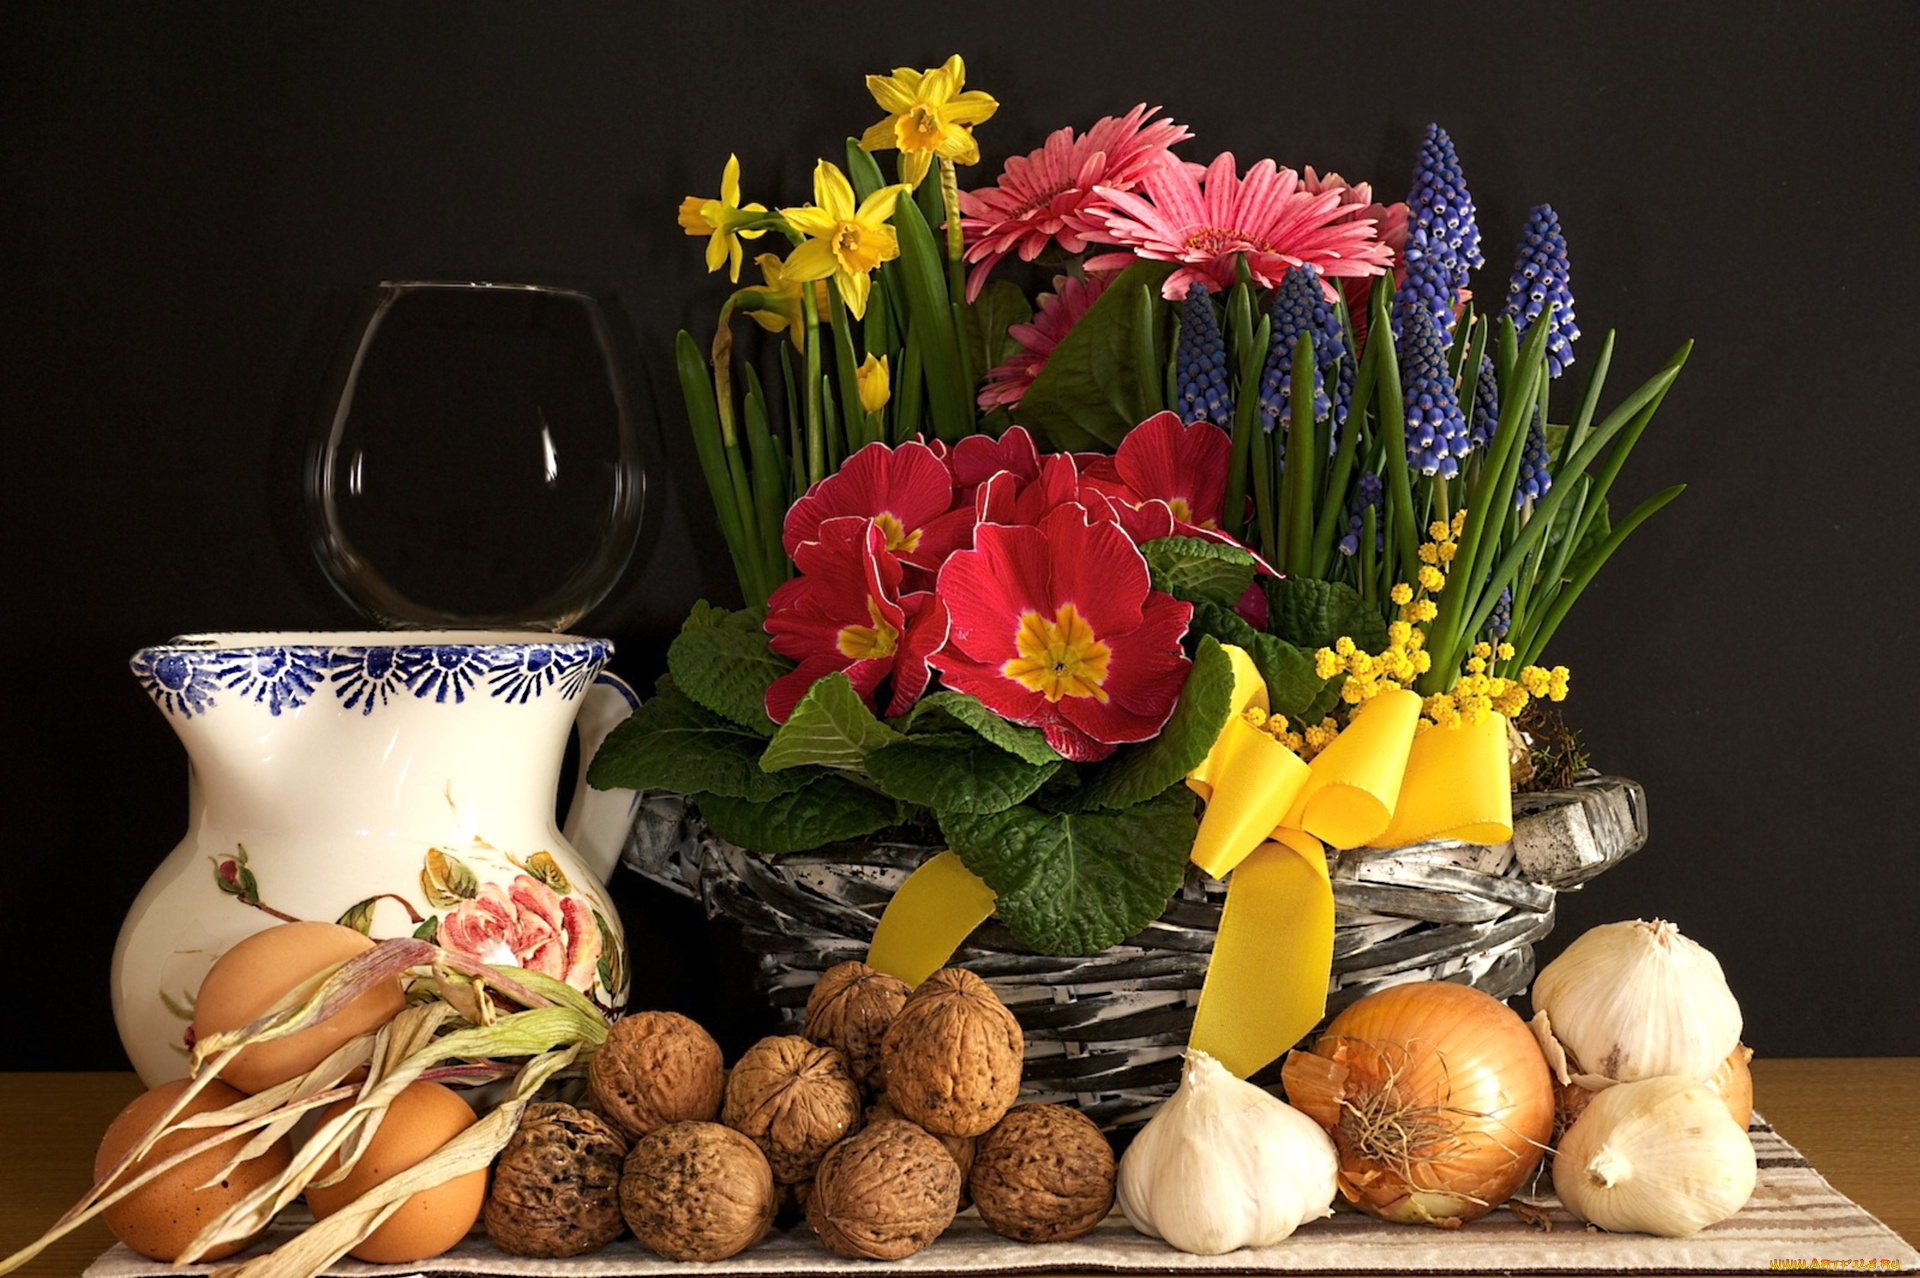 еда, натюрморт, цветы, орехи, чеснок, лук, яйца